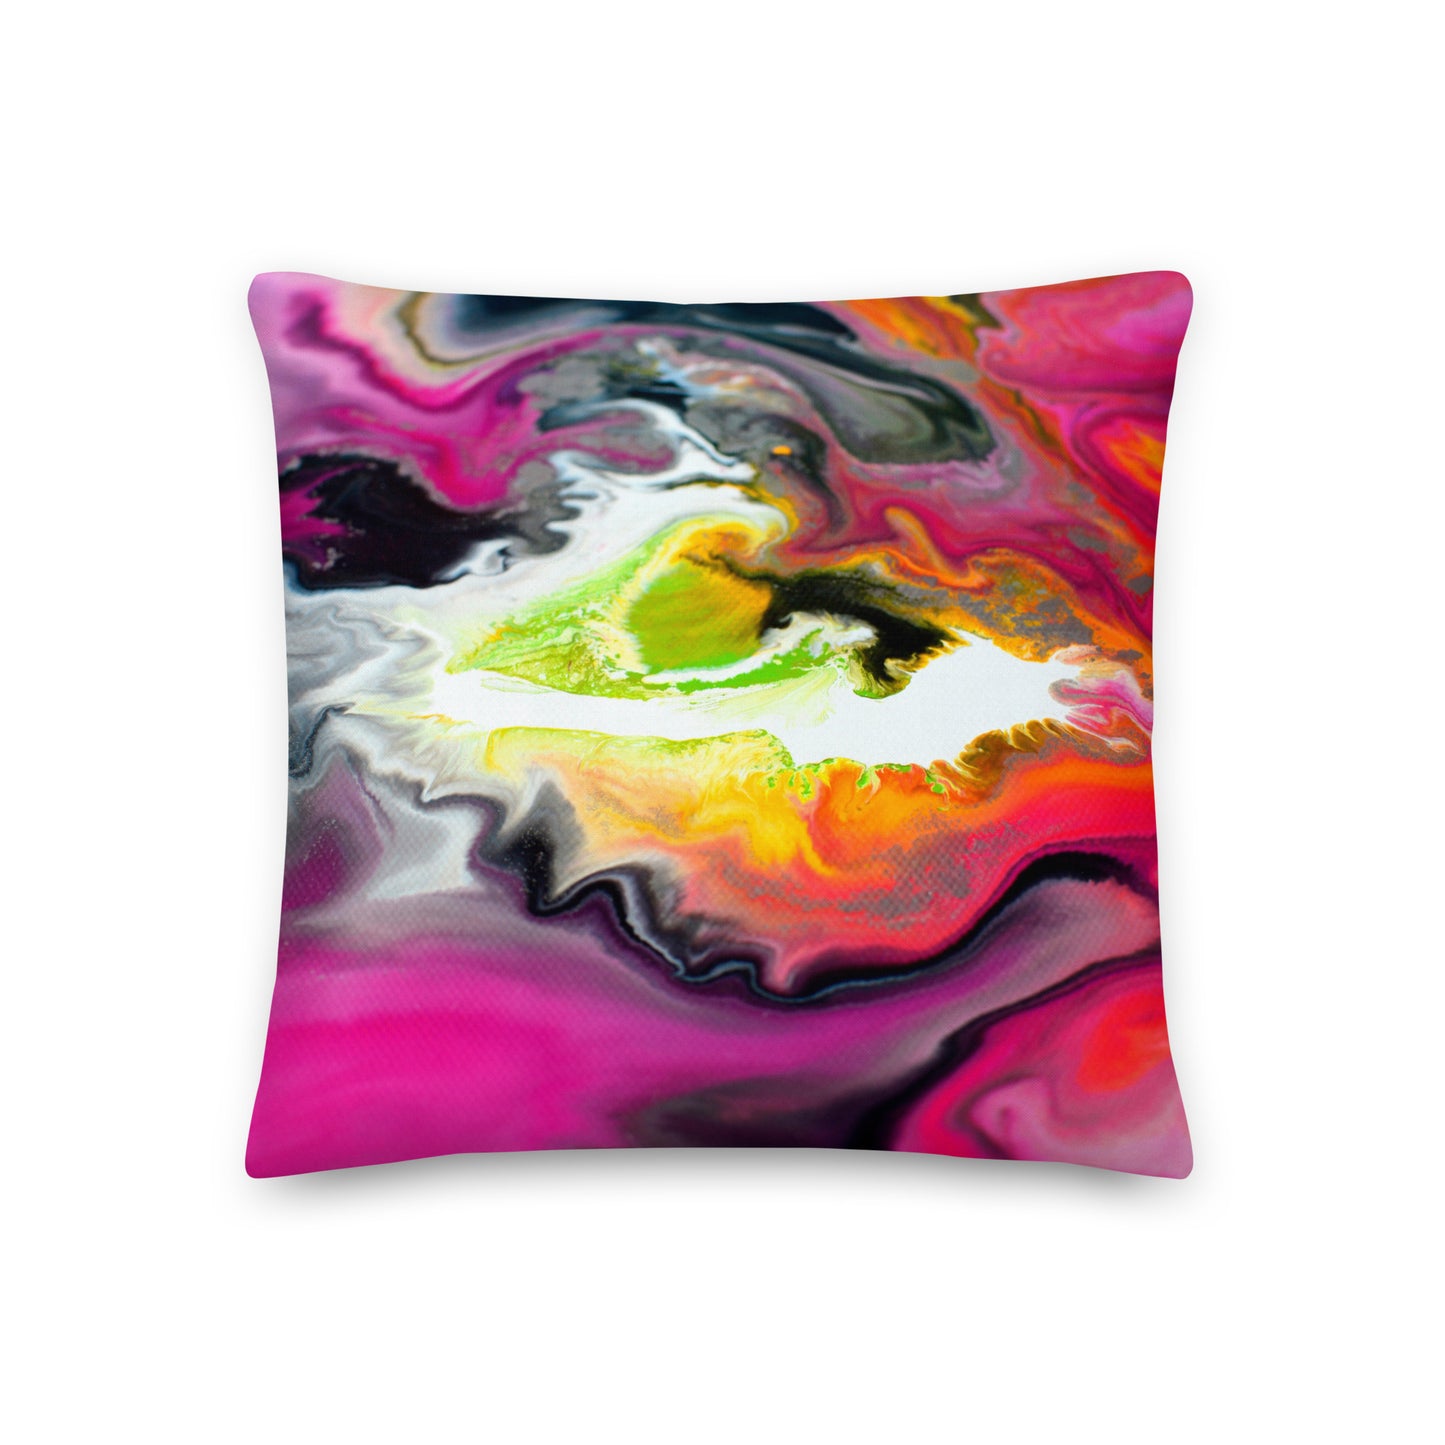 Premium Pillow - Pink and yellow design